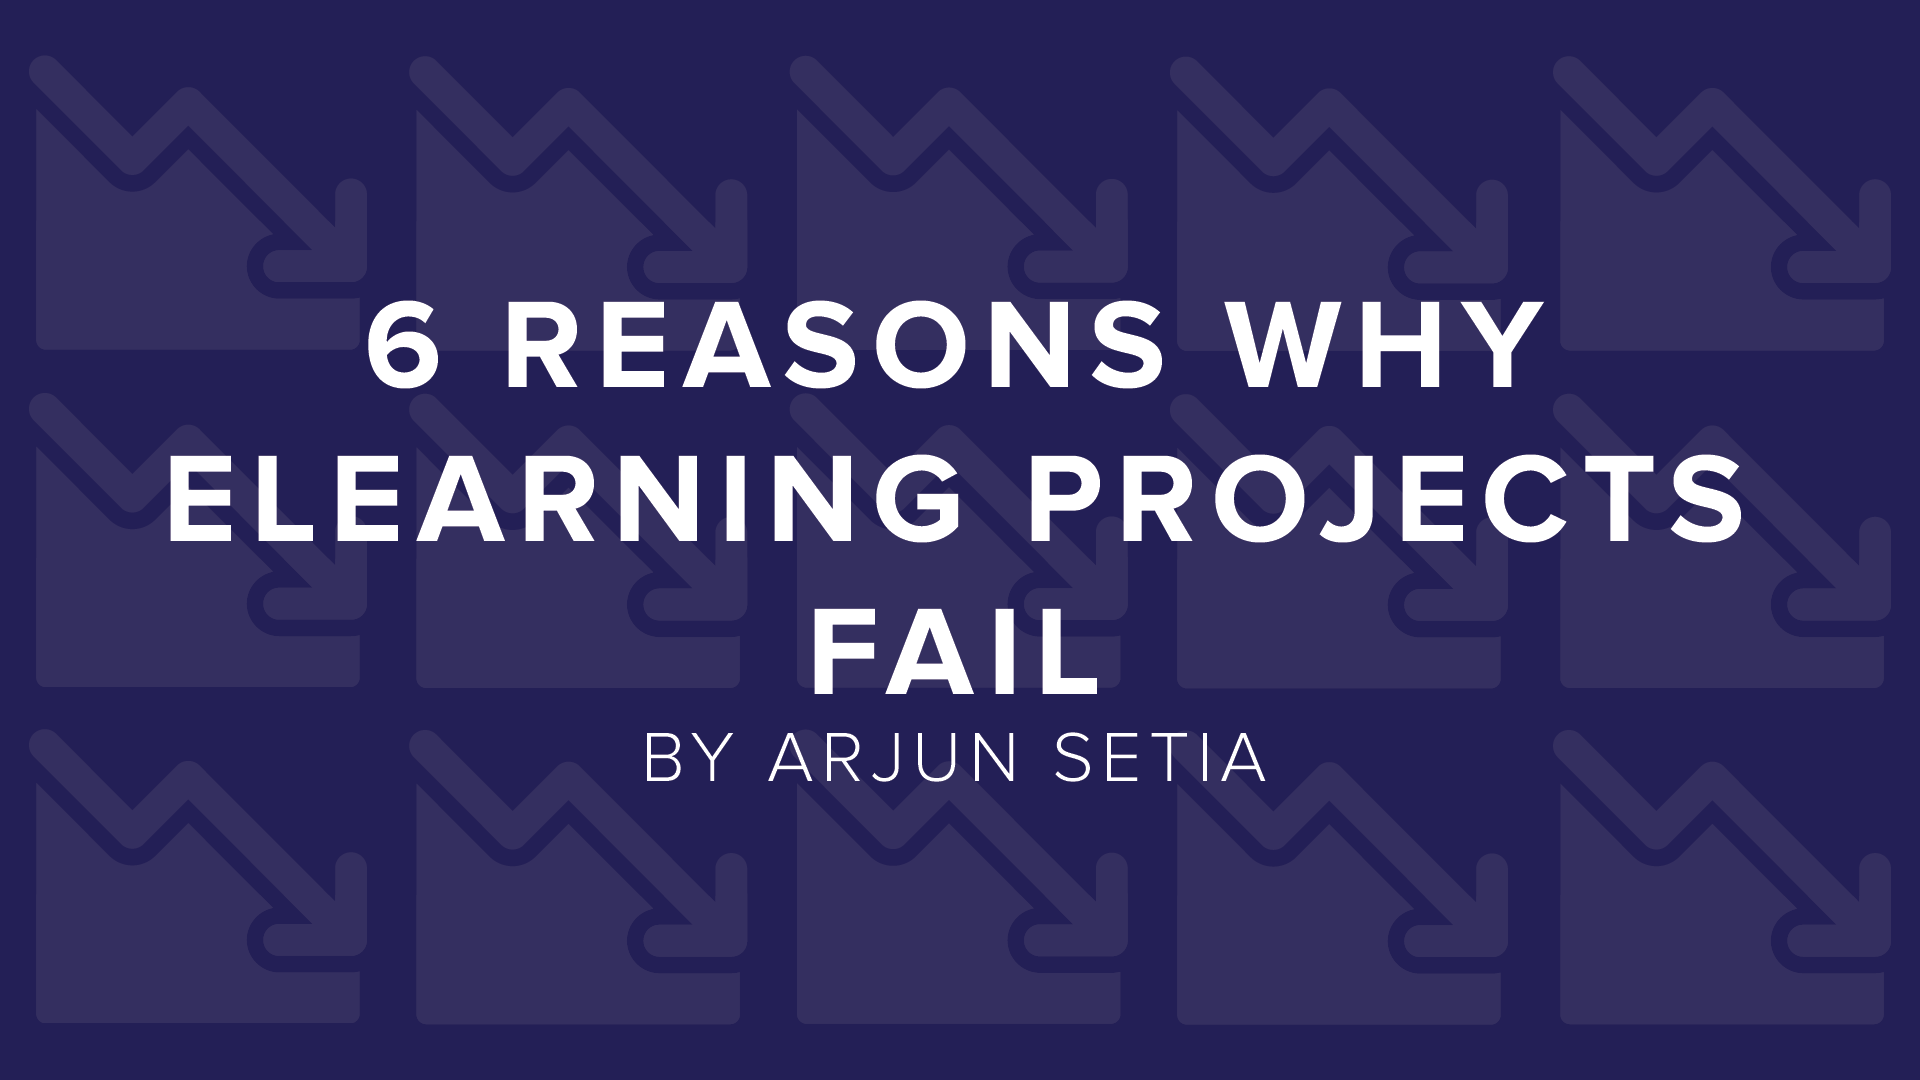 DigitalChalk: 6 Reasons Why eLearning Projects Fail by Arjun Setia